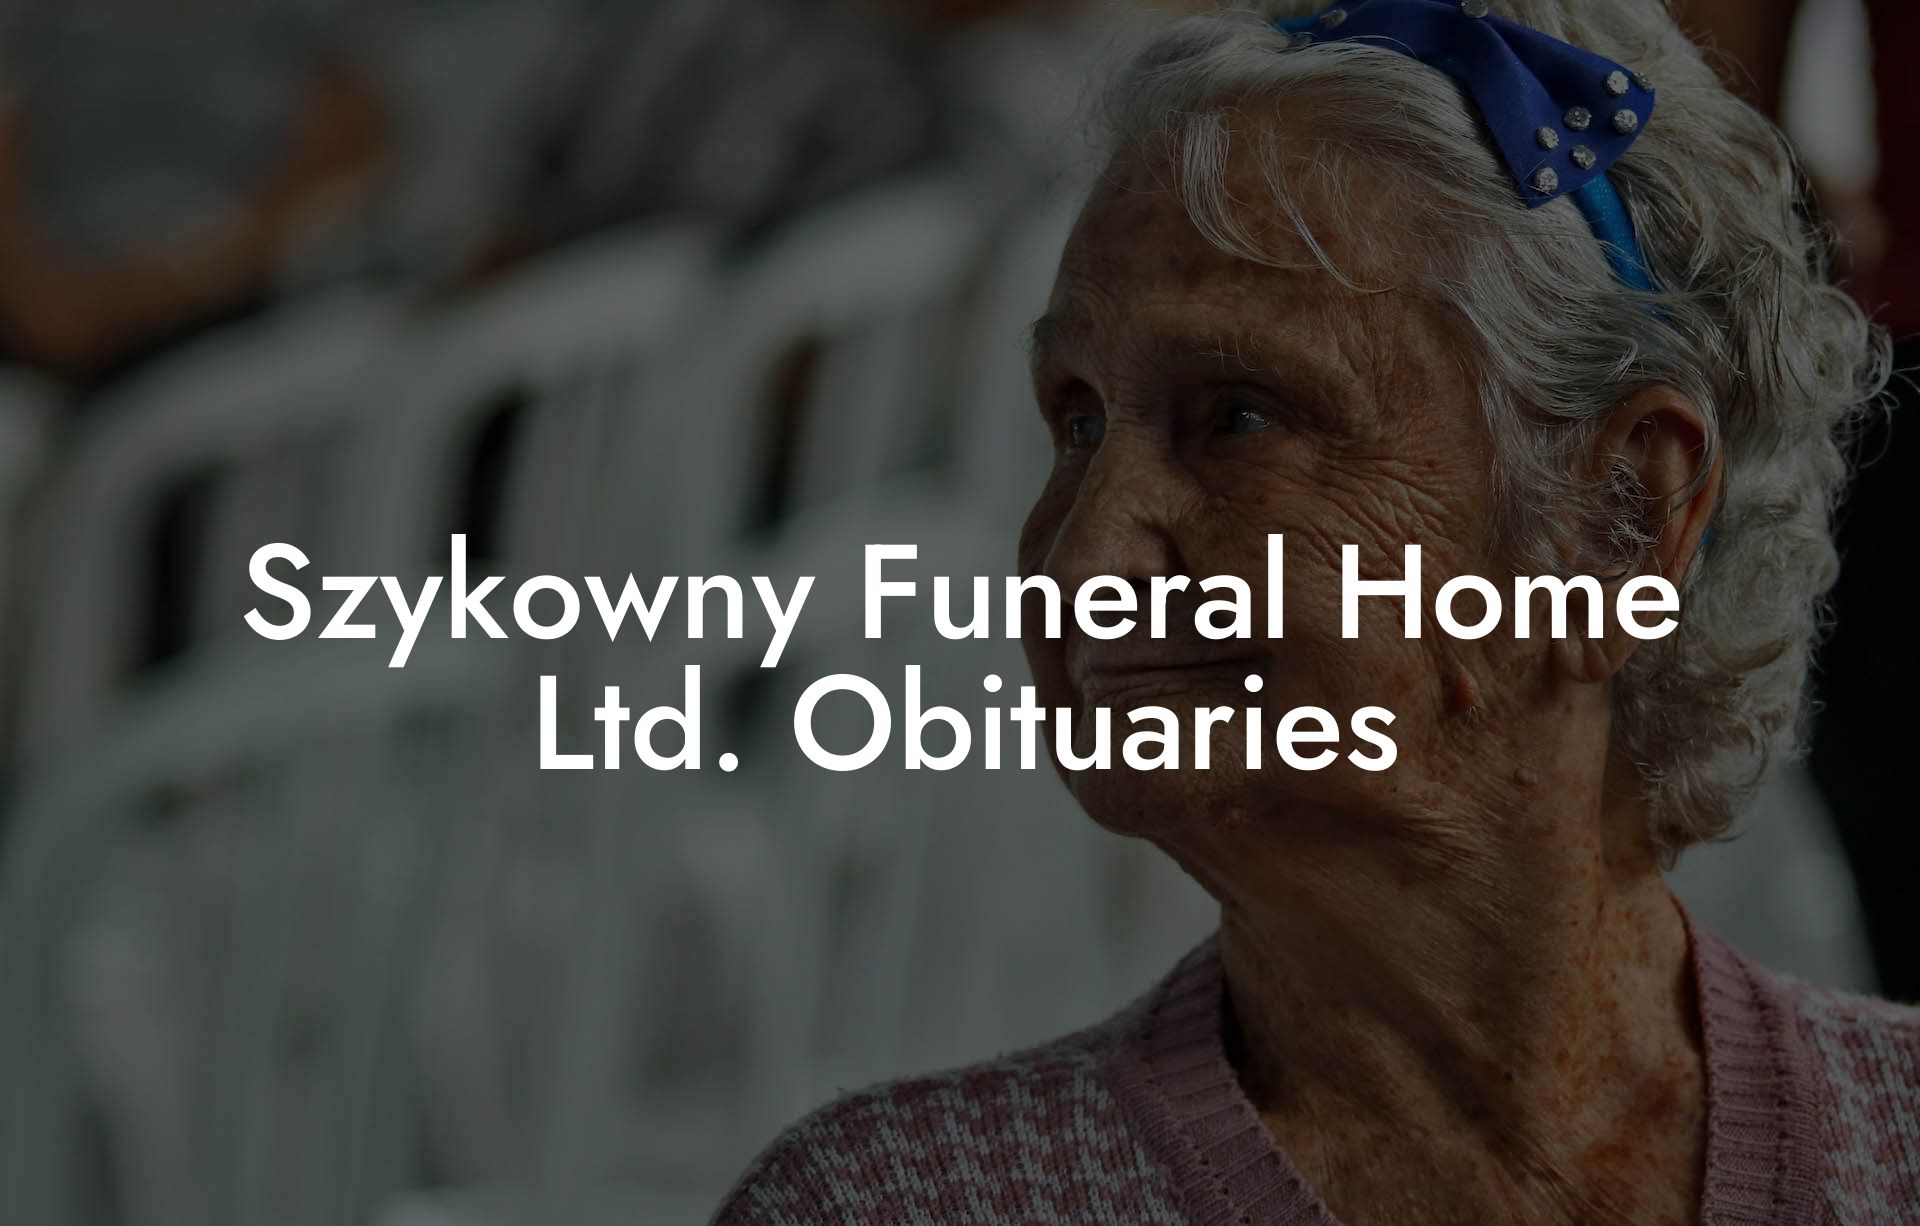 Szykowny Funeral Home Ltd. Obituaries